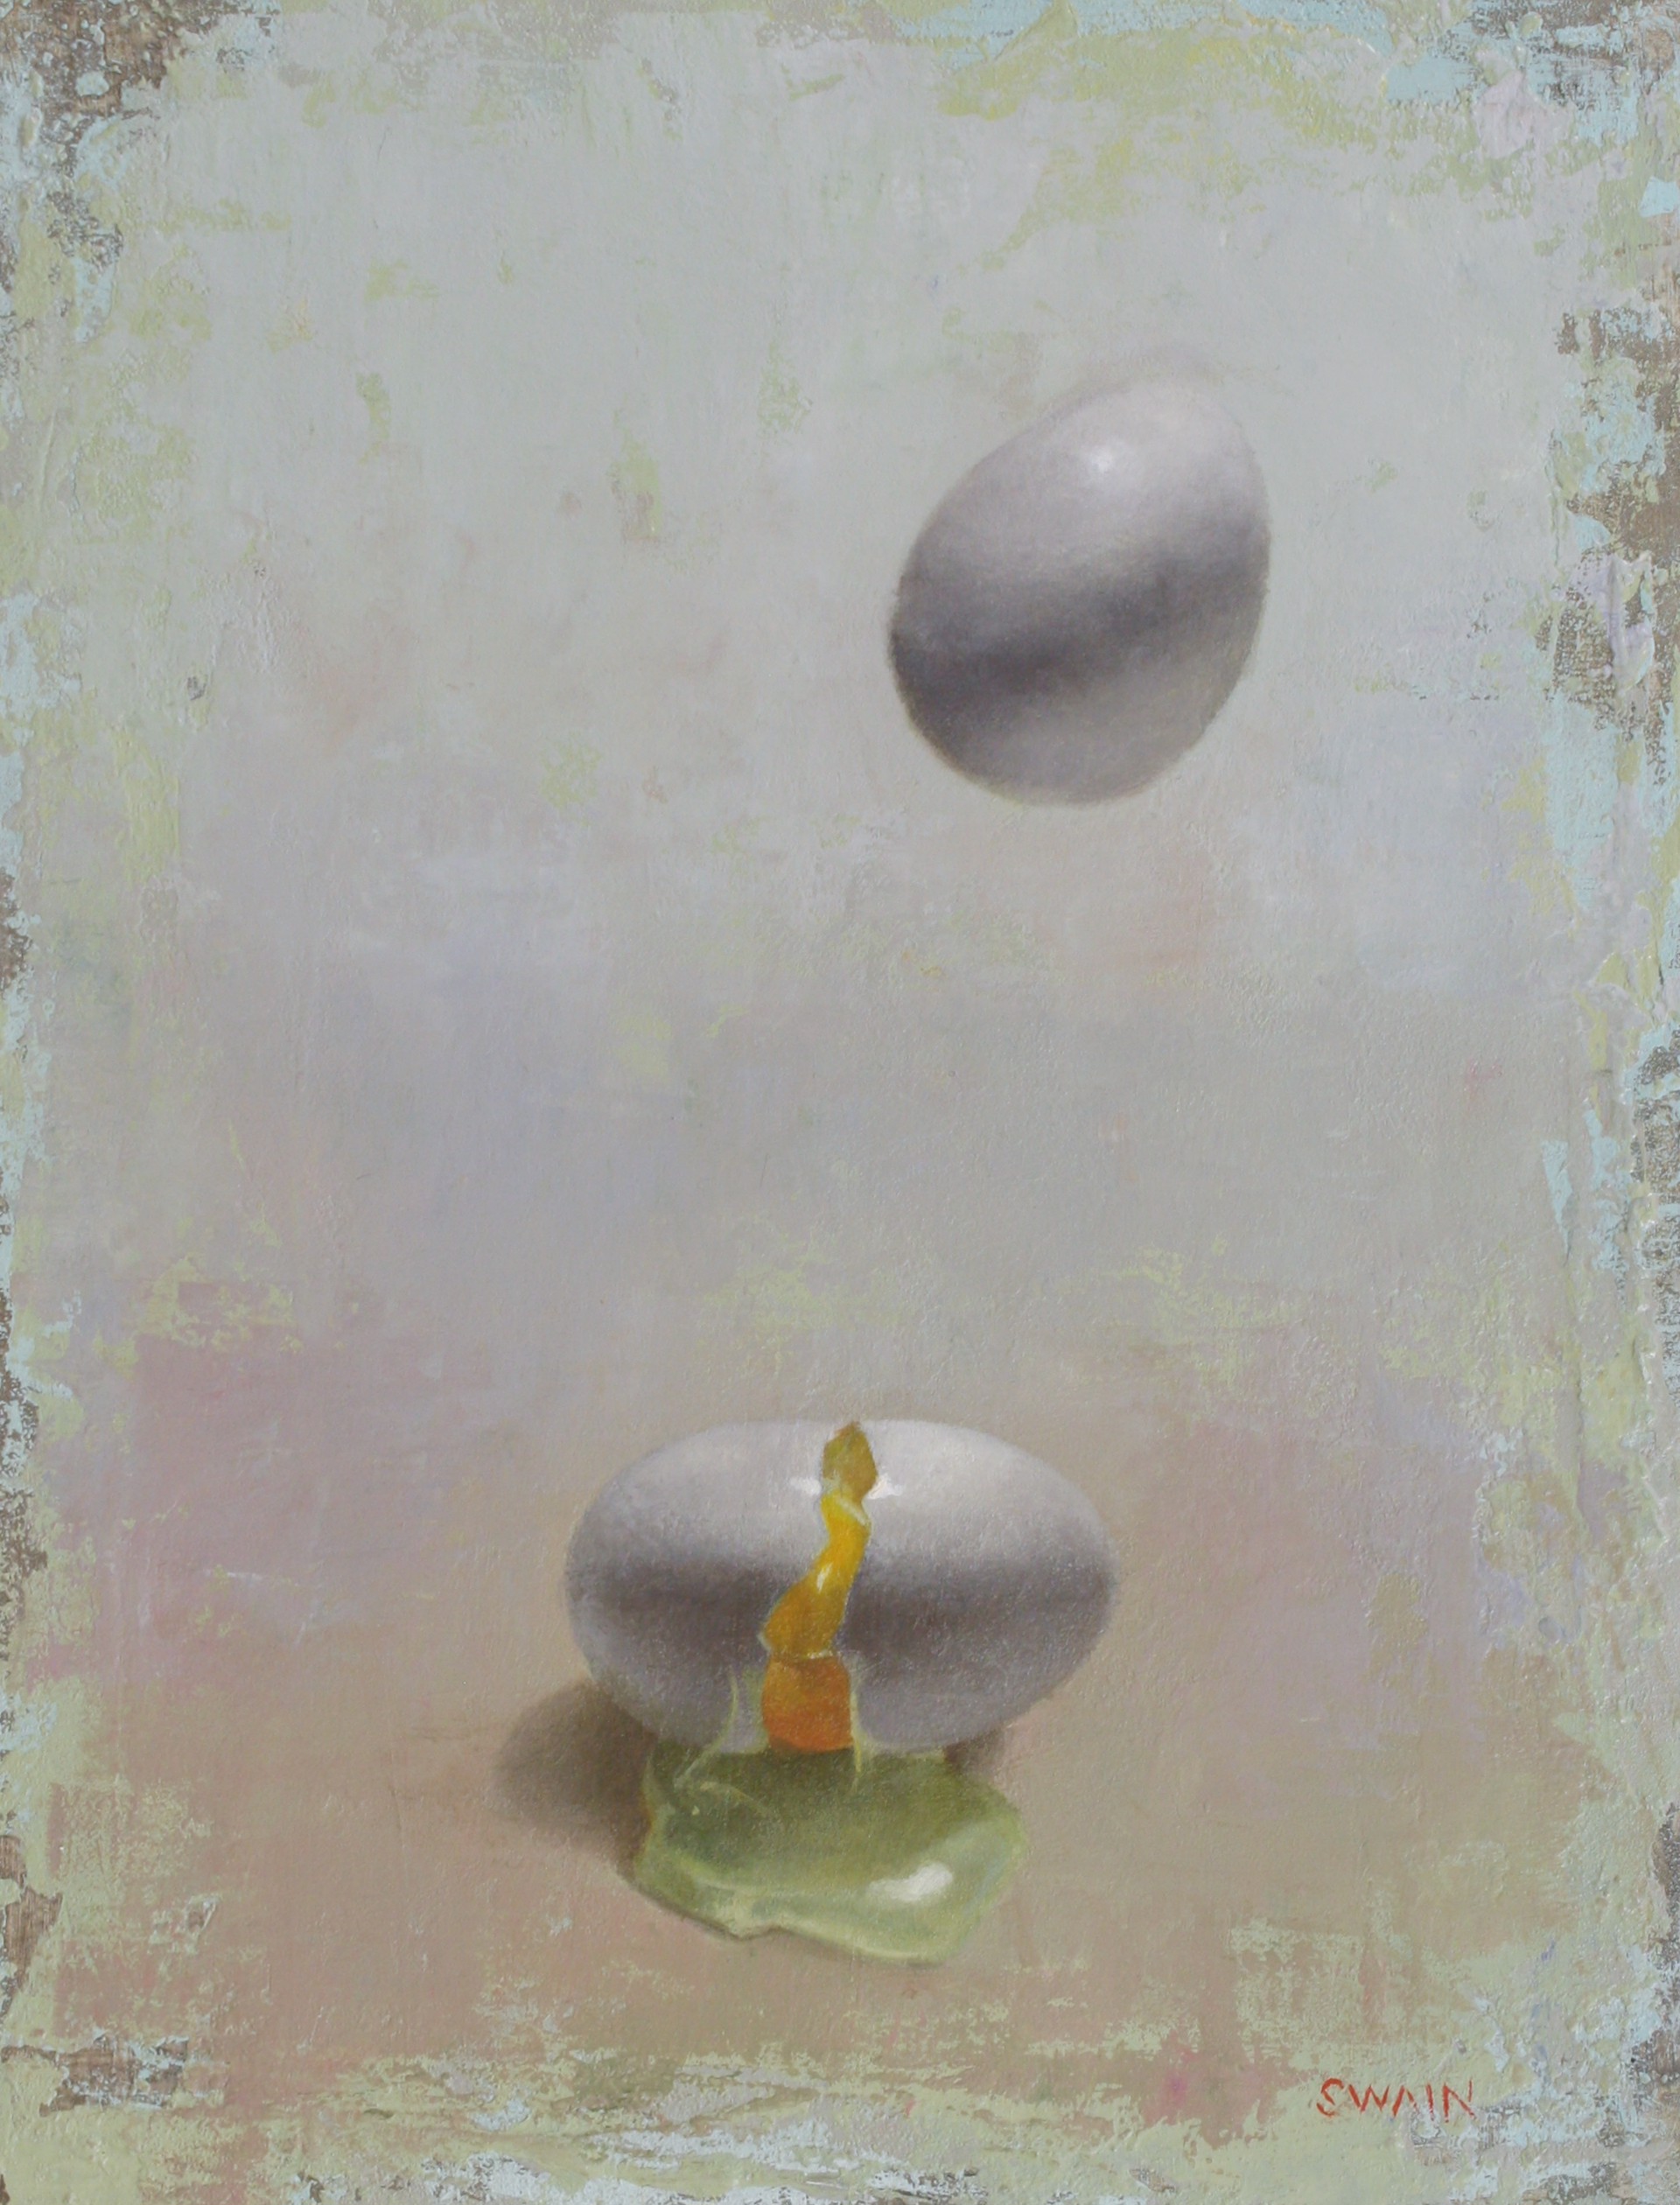 Egg Drop by Tyler Swain